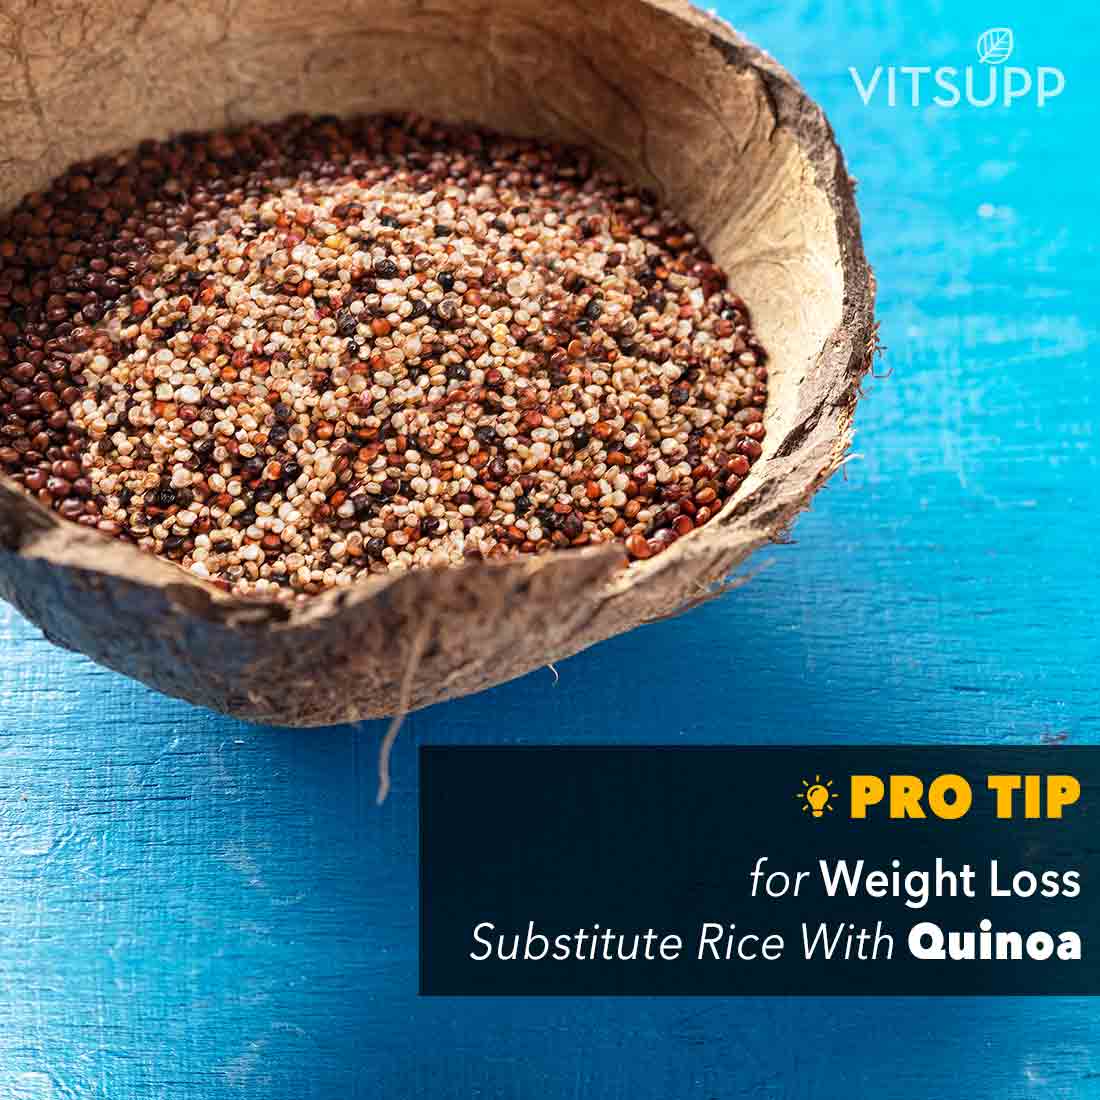 quinoa benefits weight loss